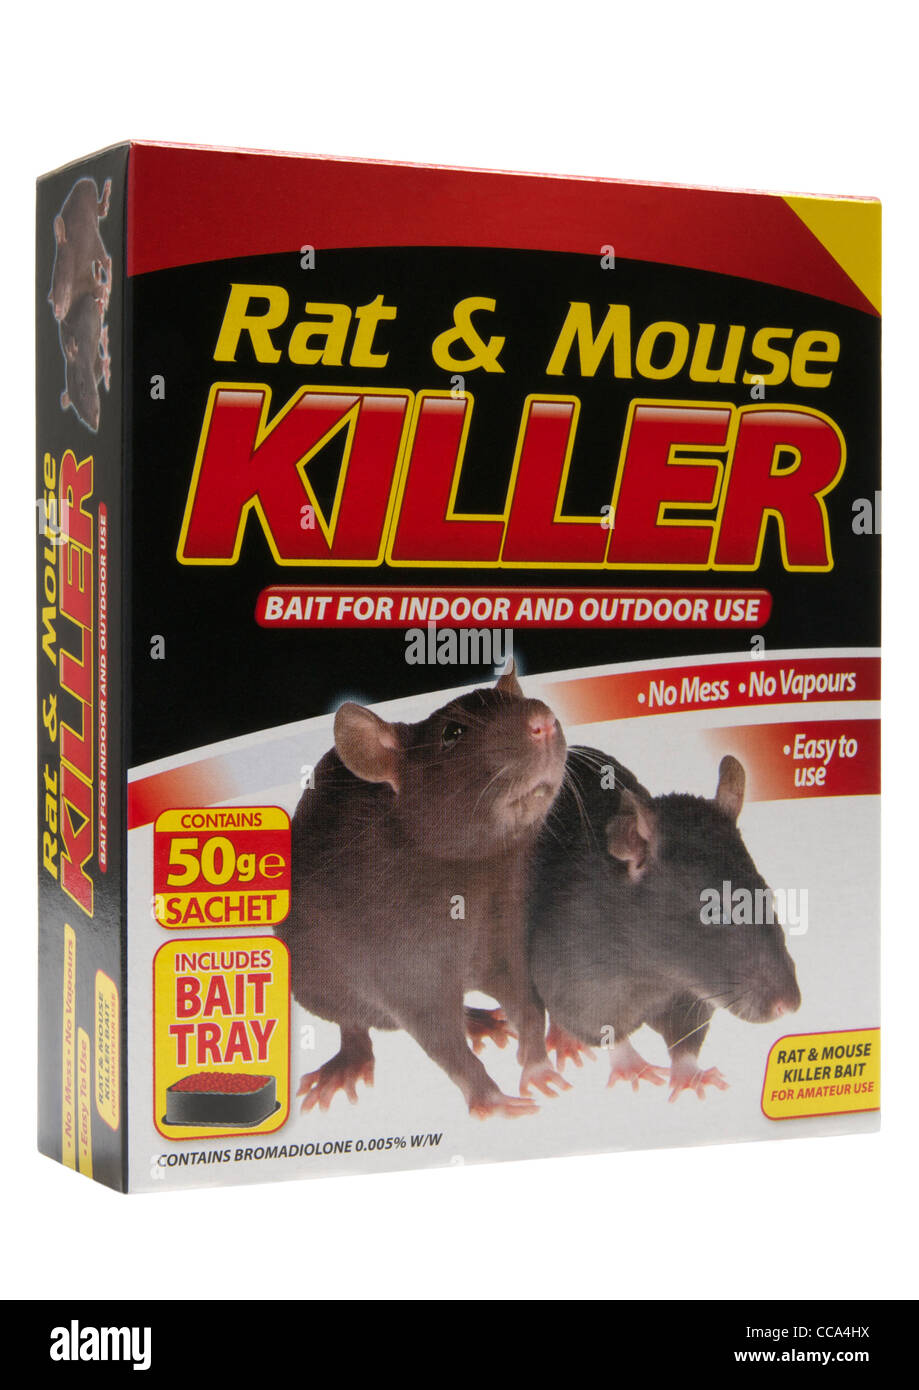 https://c8.alamy.com/comp/CCA4HX/box-of-rat-and-mouse-bait-killer-on-white-background-CCA4HX.jpg